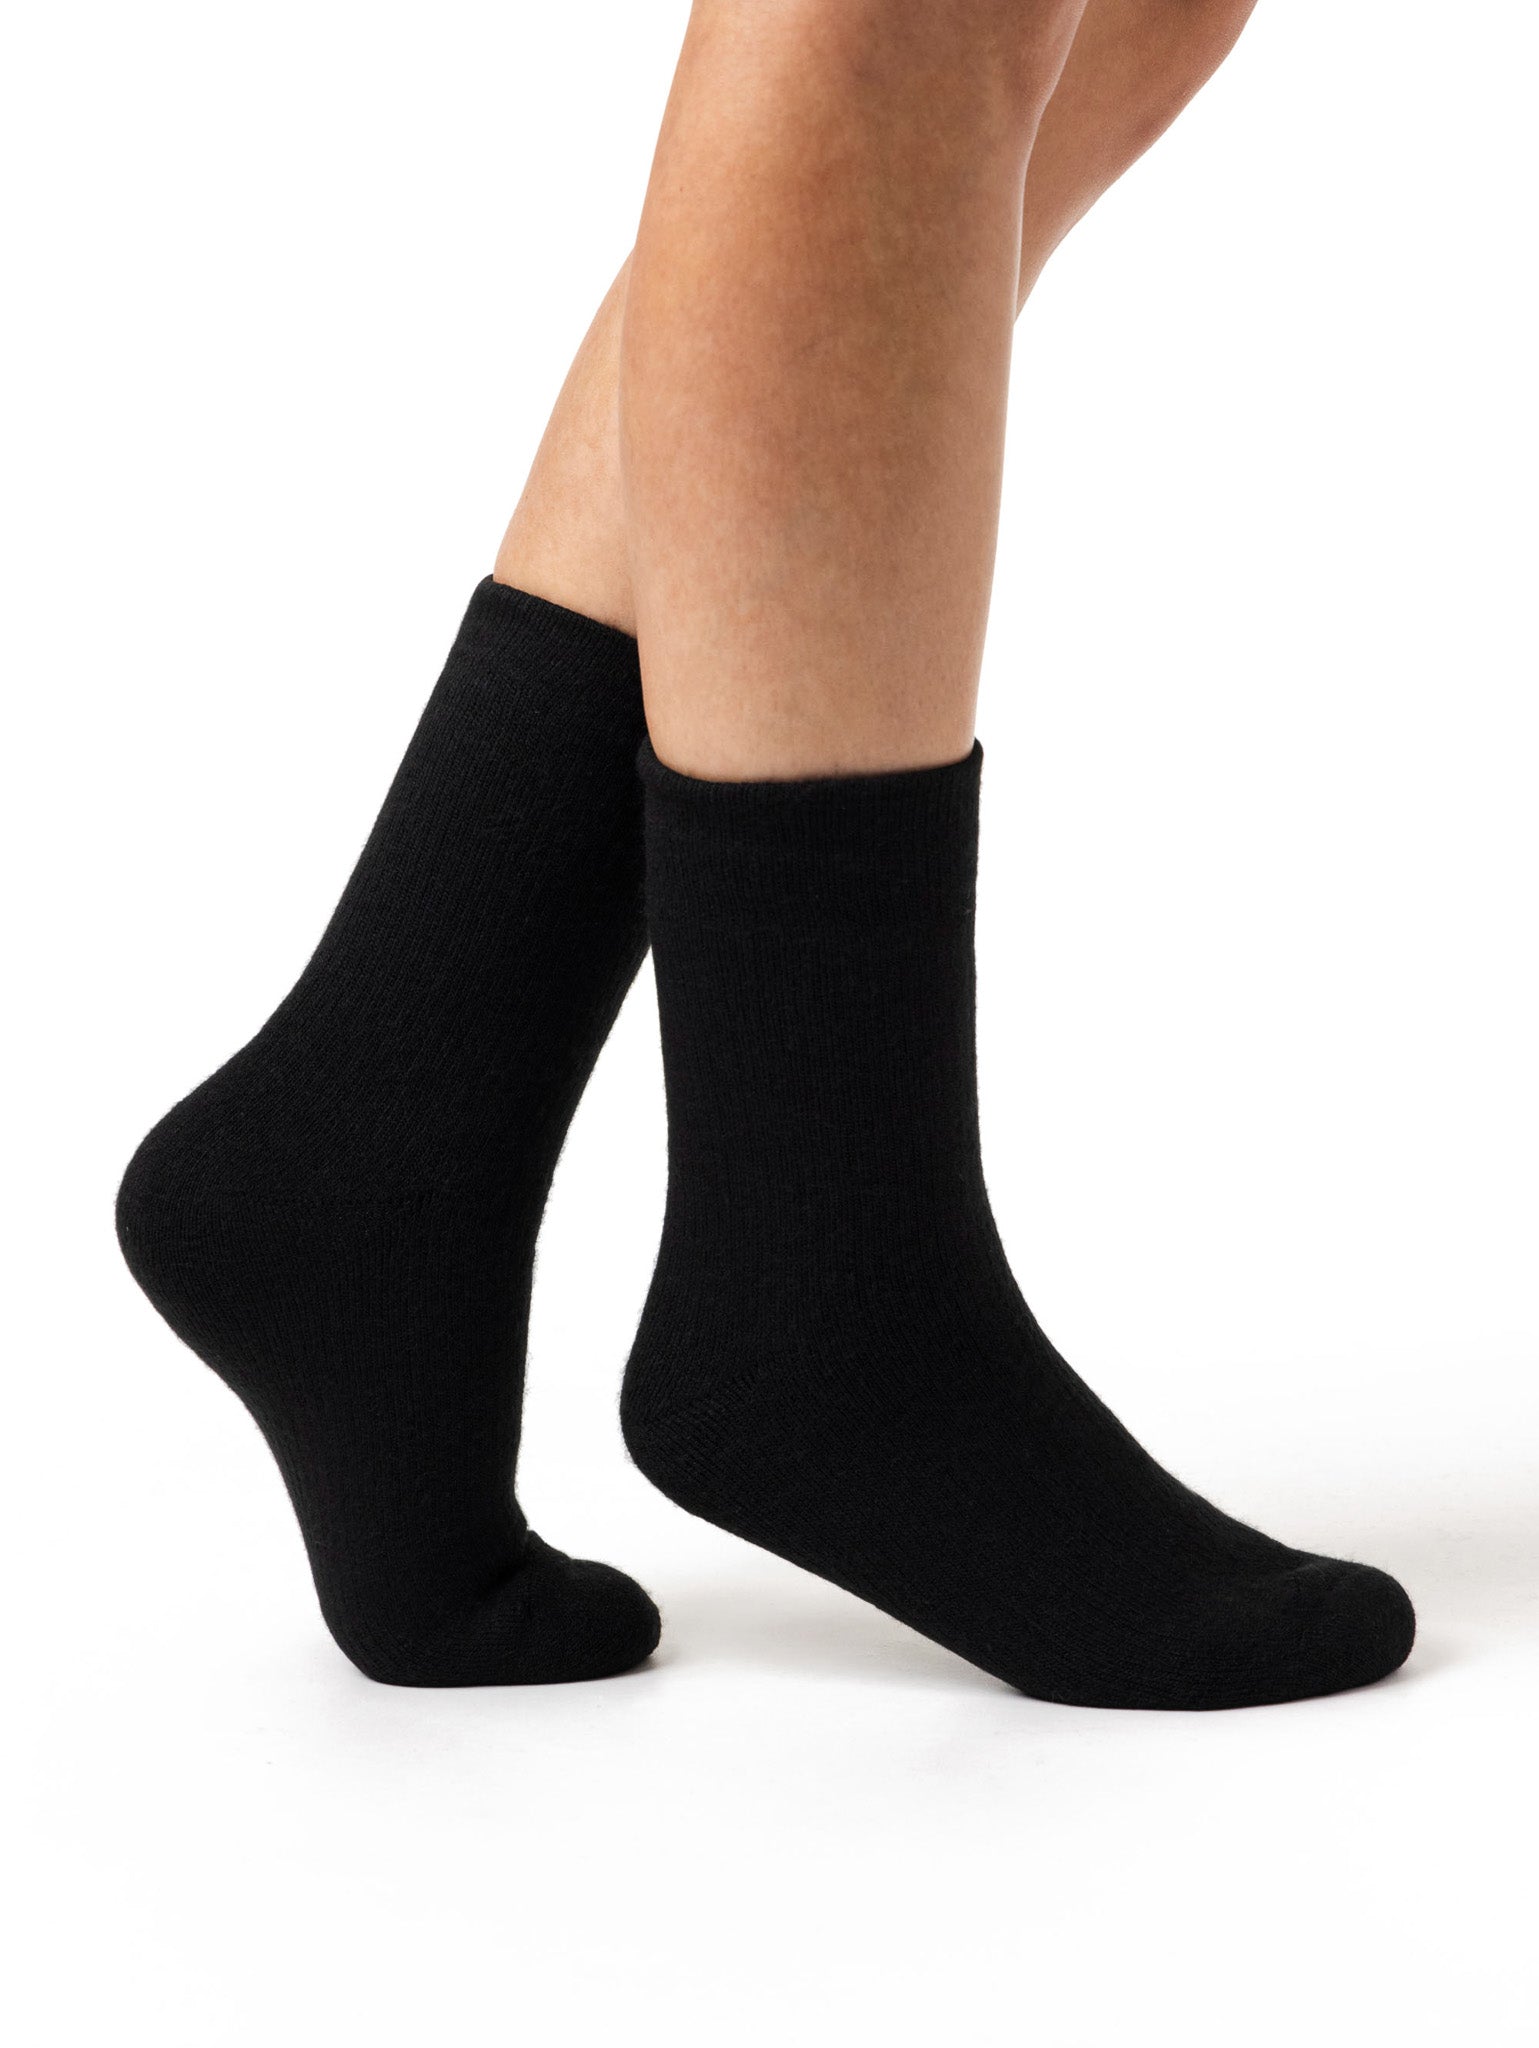 HEAT HOLDERS Outdoor Waterproof Socks - Unisex